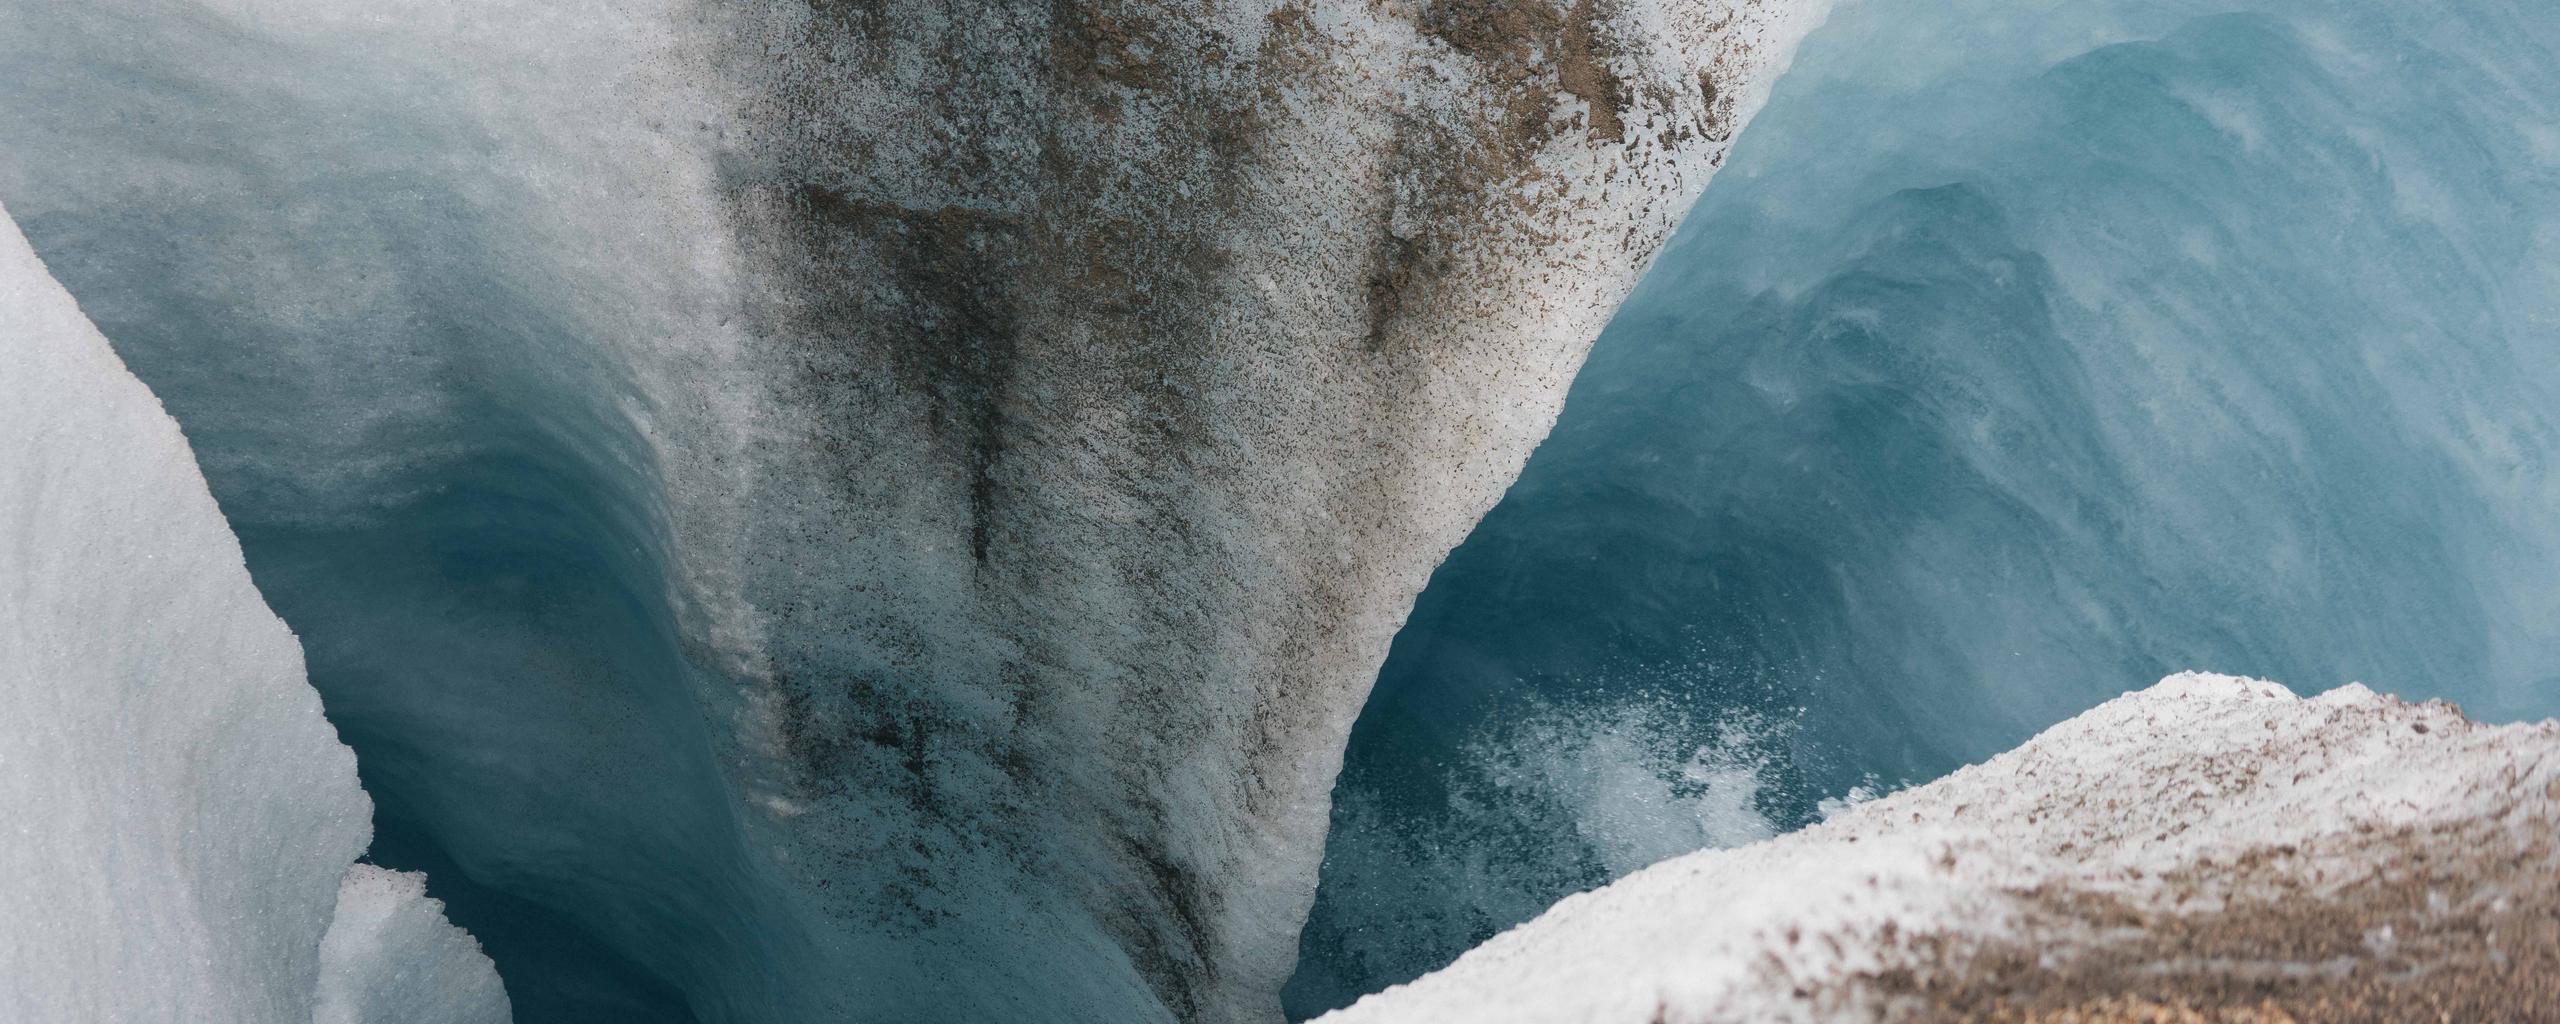 Ice cave in Alaska